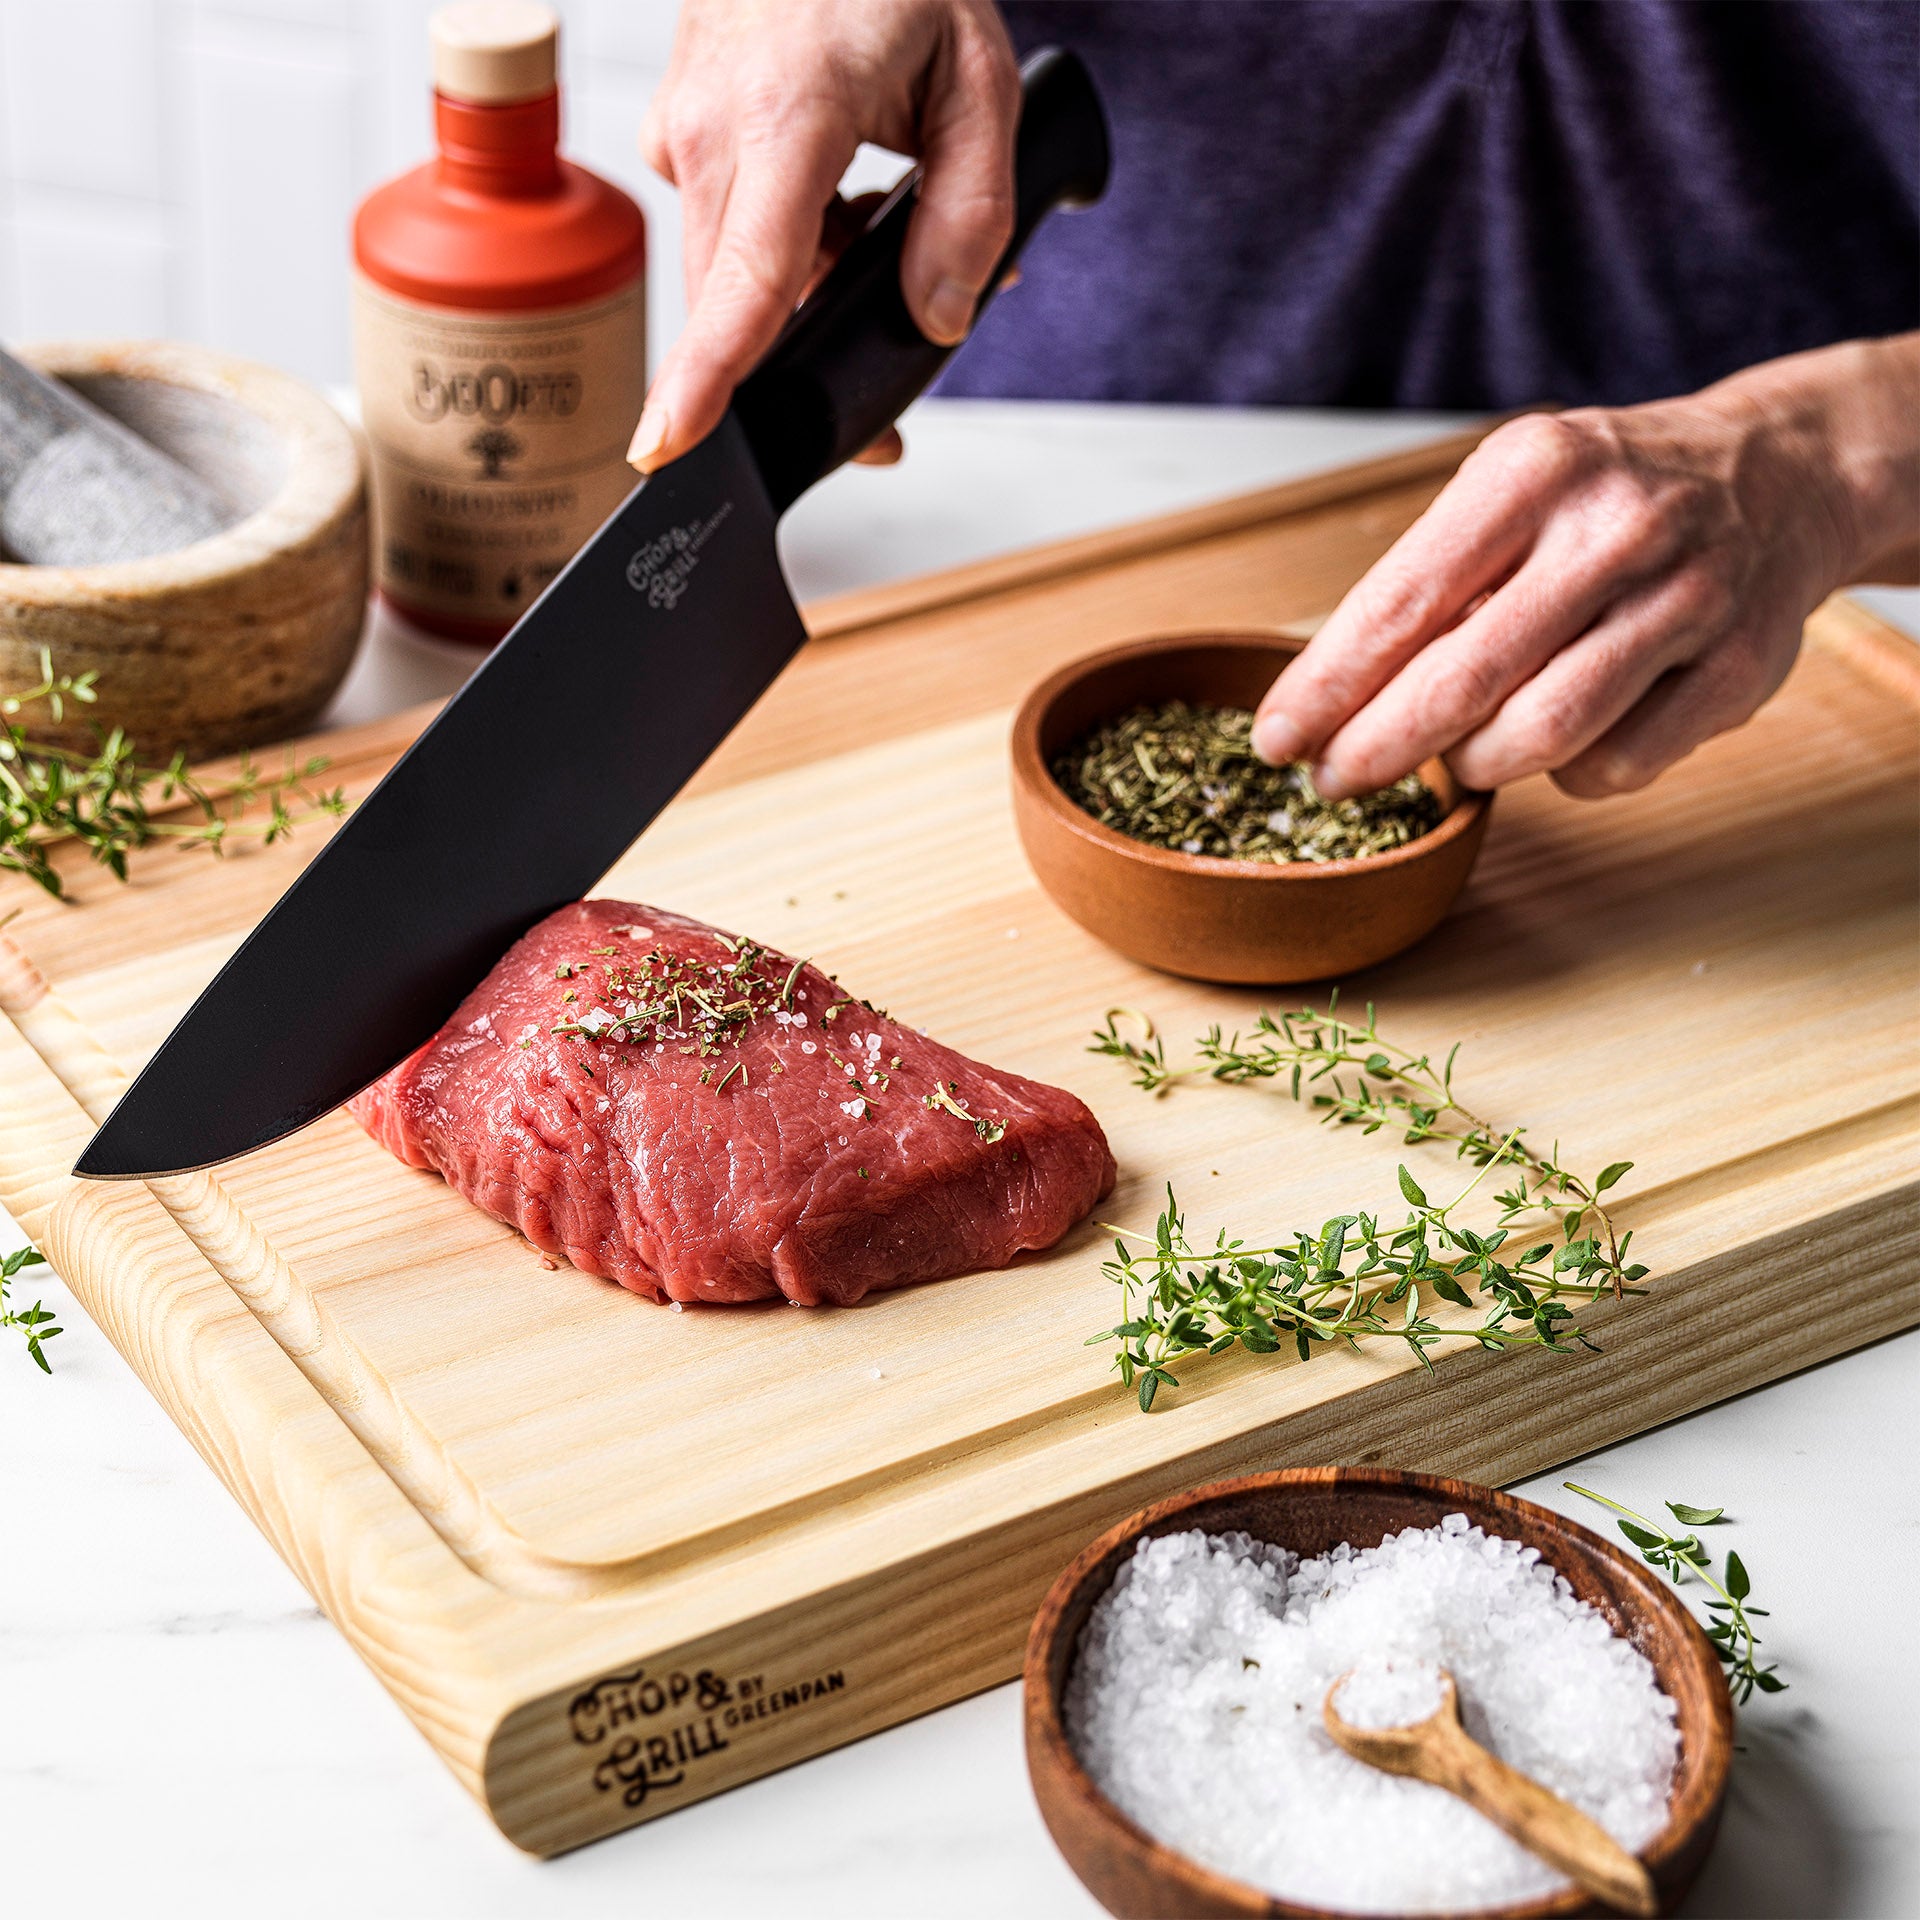 Chop & Grill Snijplank hout met vlees en kruiden